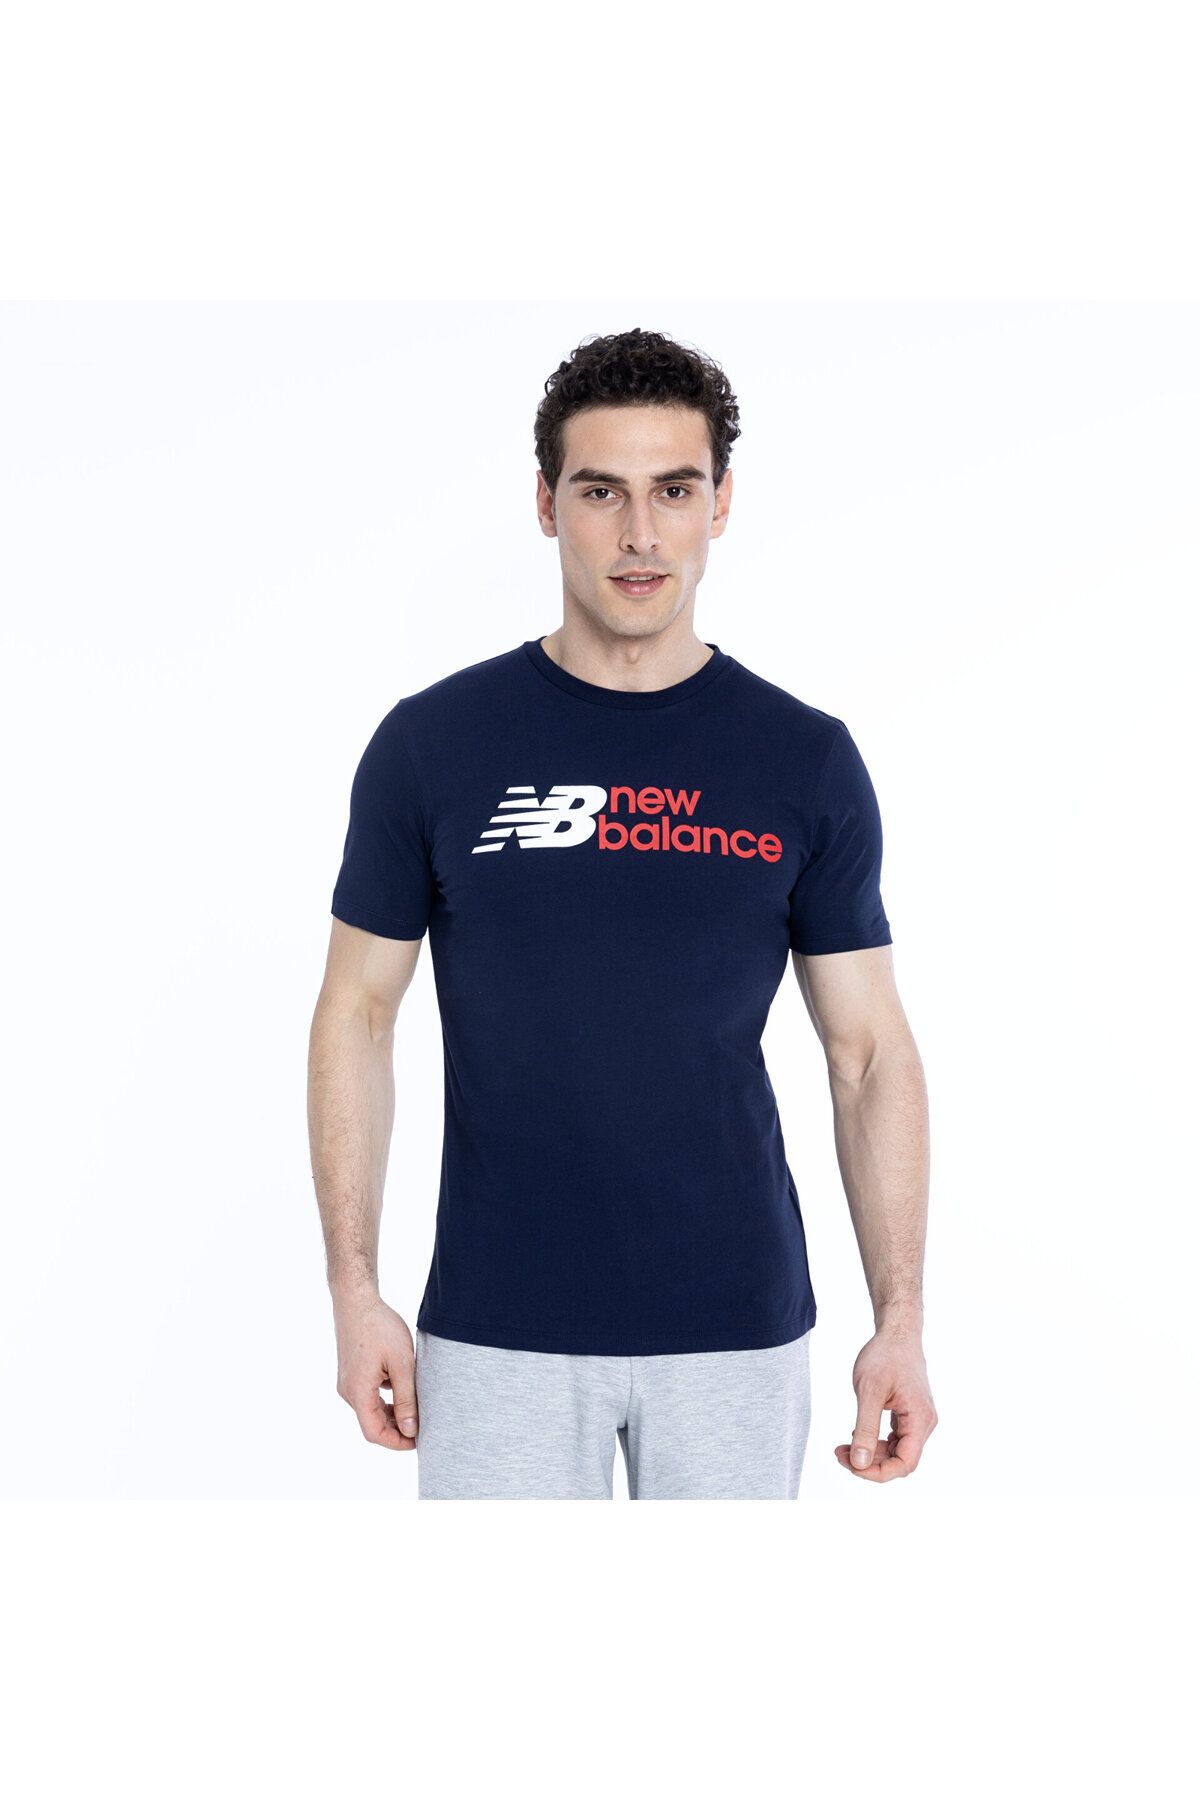 New Balance NB Man Lifestyle T-shirt